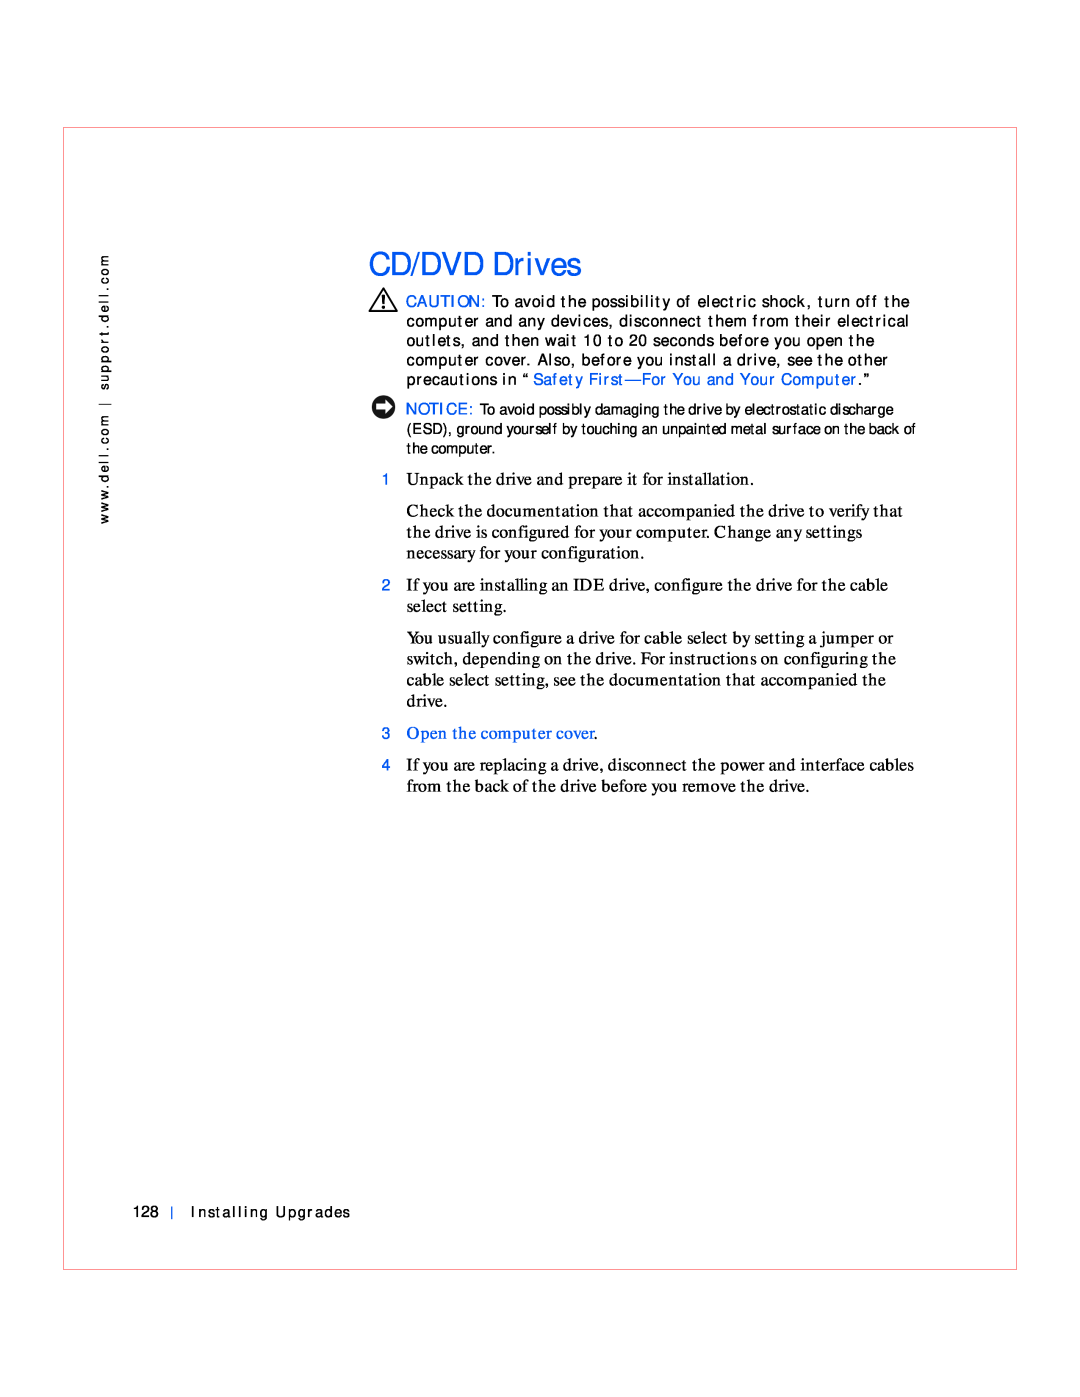 Dell GX240 manual CD/DVD Drives 